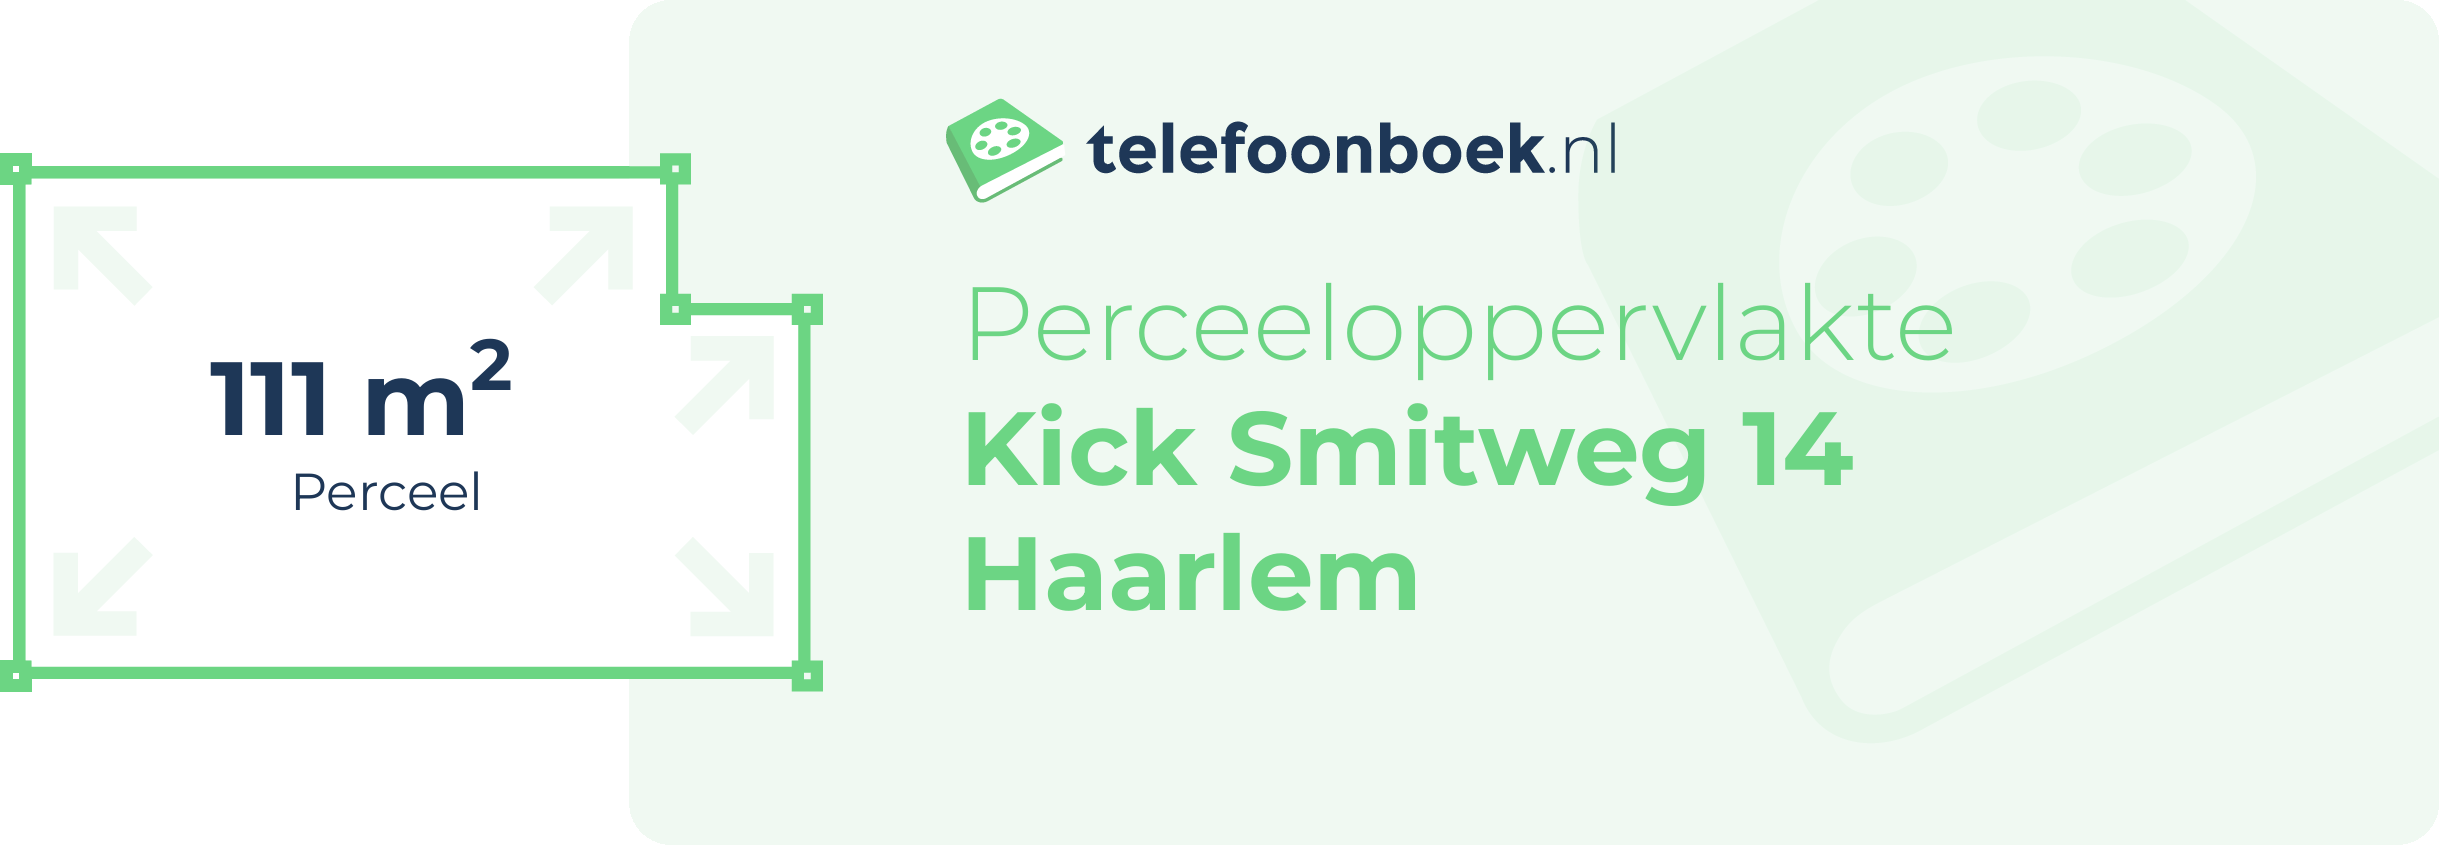 Perceeloppervlakte Kick Smitweg 14 Haarlem